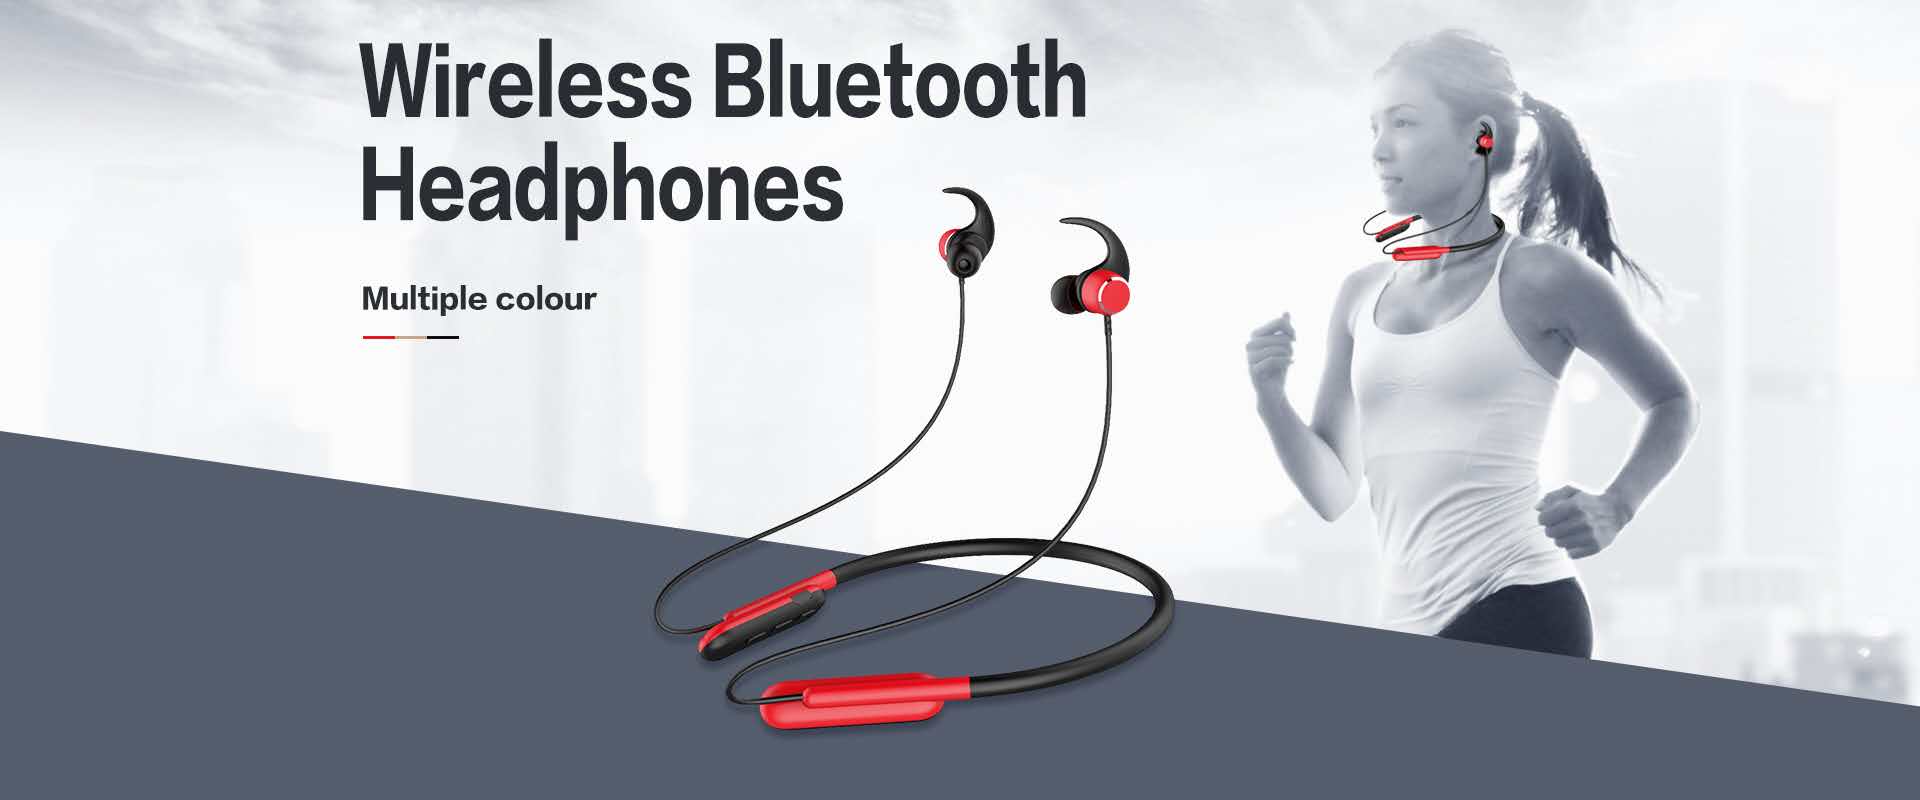 arrebol wireless bluetooth headphones